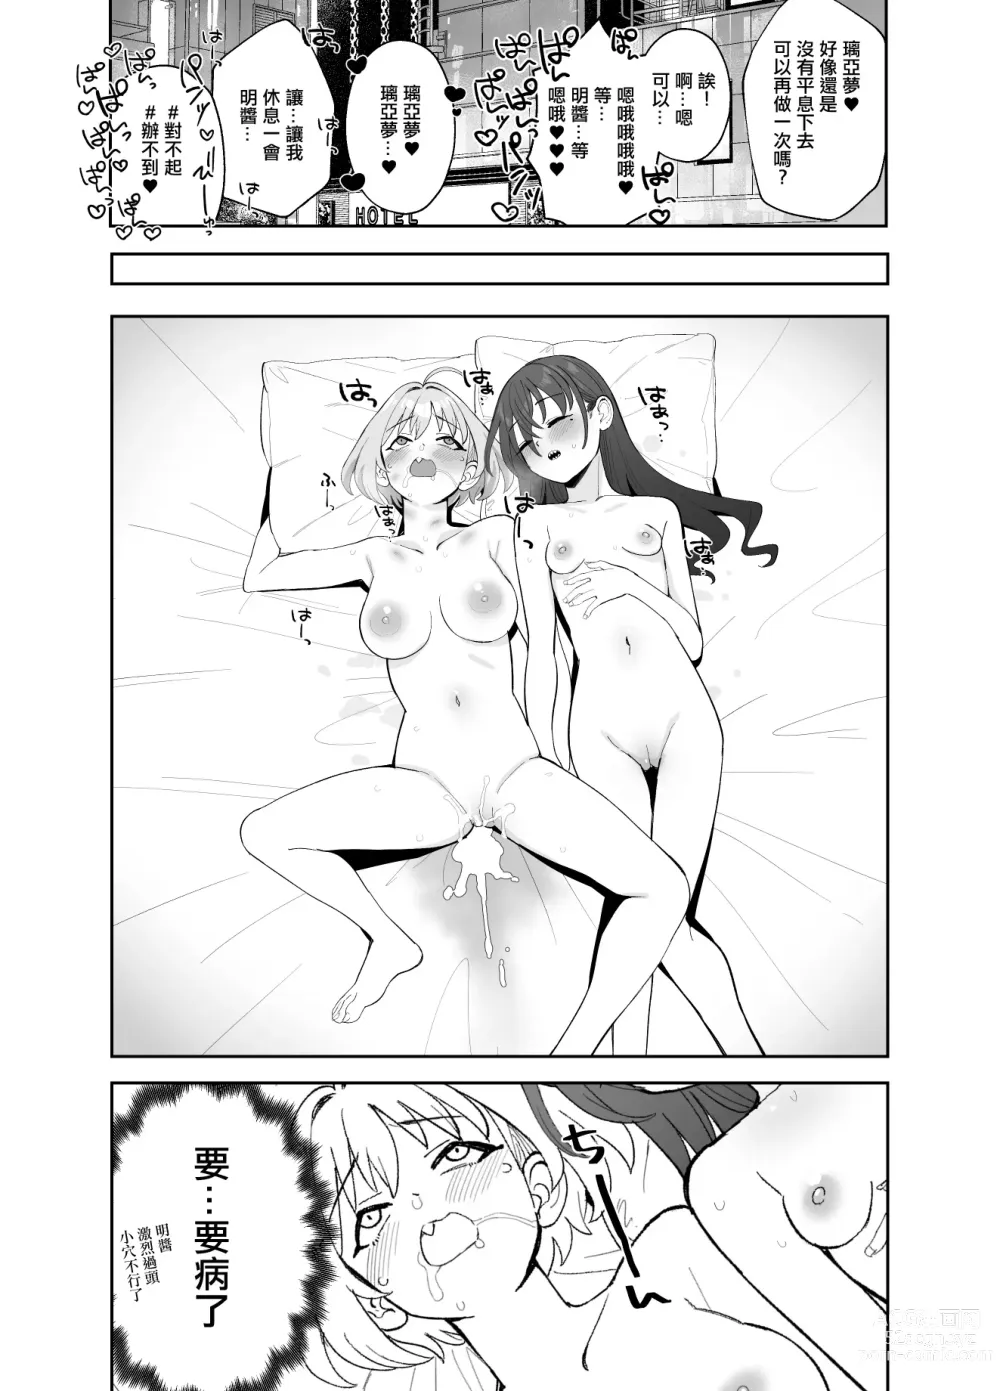 Page 13 of doujinshi 明長出了肉棒與璃亞夢做愛的漫畫